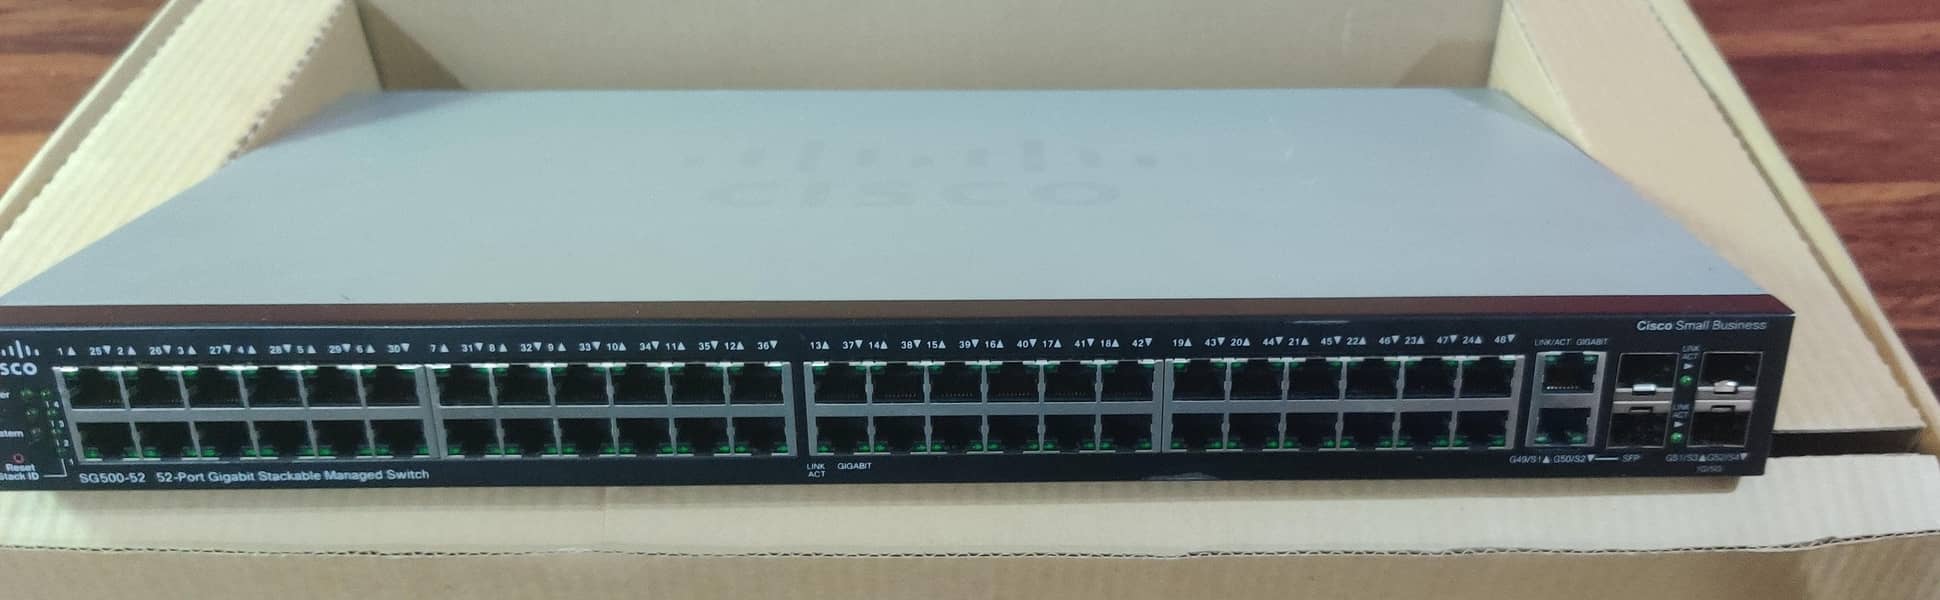 Cisco SG500-52 52-Ports Gigabit Manageable Switch (Open Box) 4